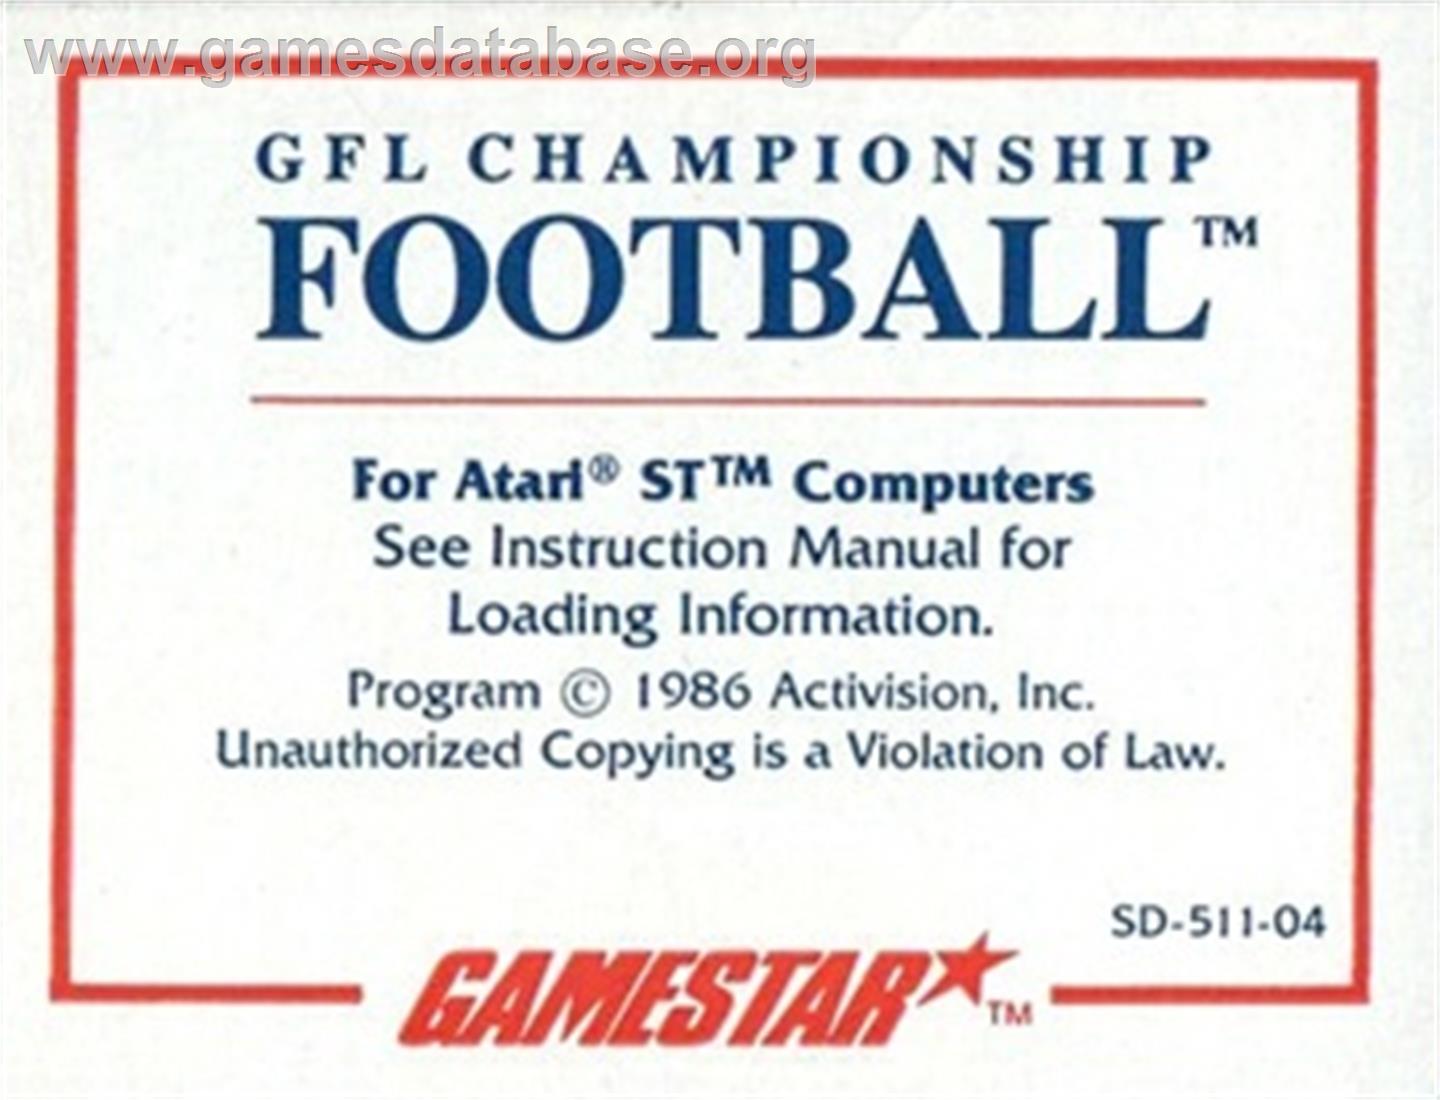 GFL Championship Football - Atari ST - Artwork - Cartridge Top